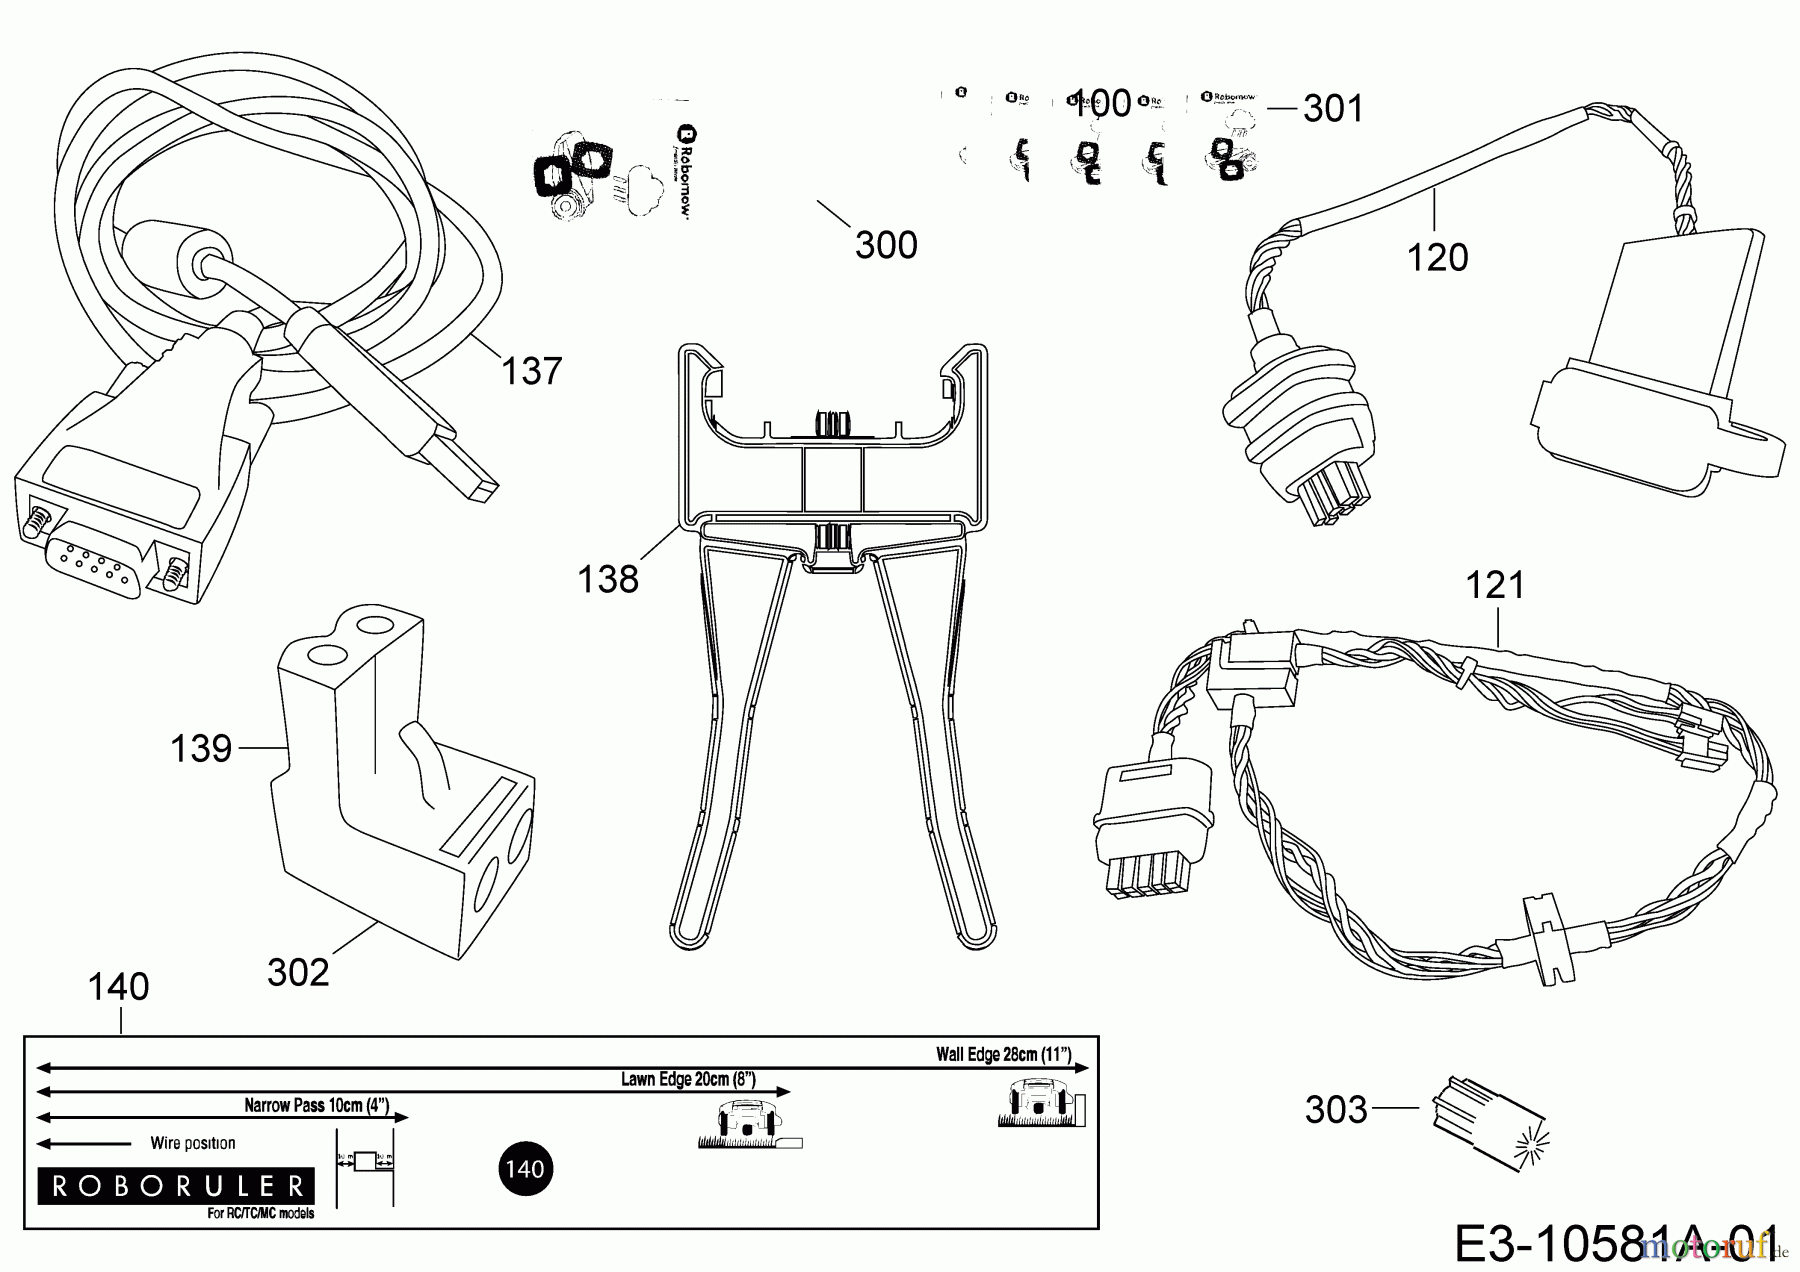  Robomow Mähroboter MC500 PRD7006Y1  (2015) Kabel, Kabelanschluß, Regensensor, Werkzeug